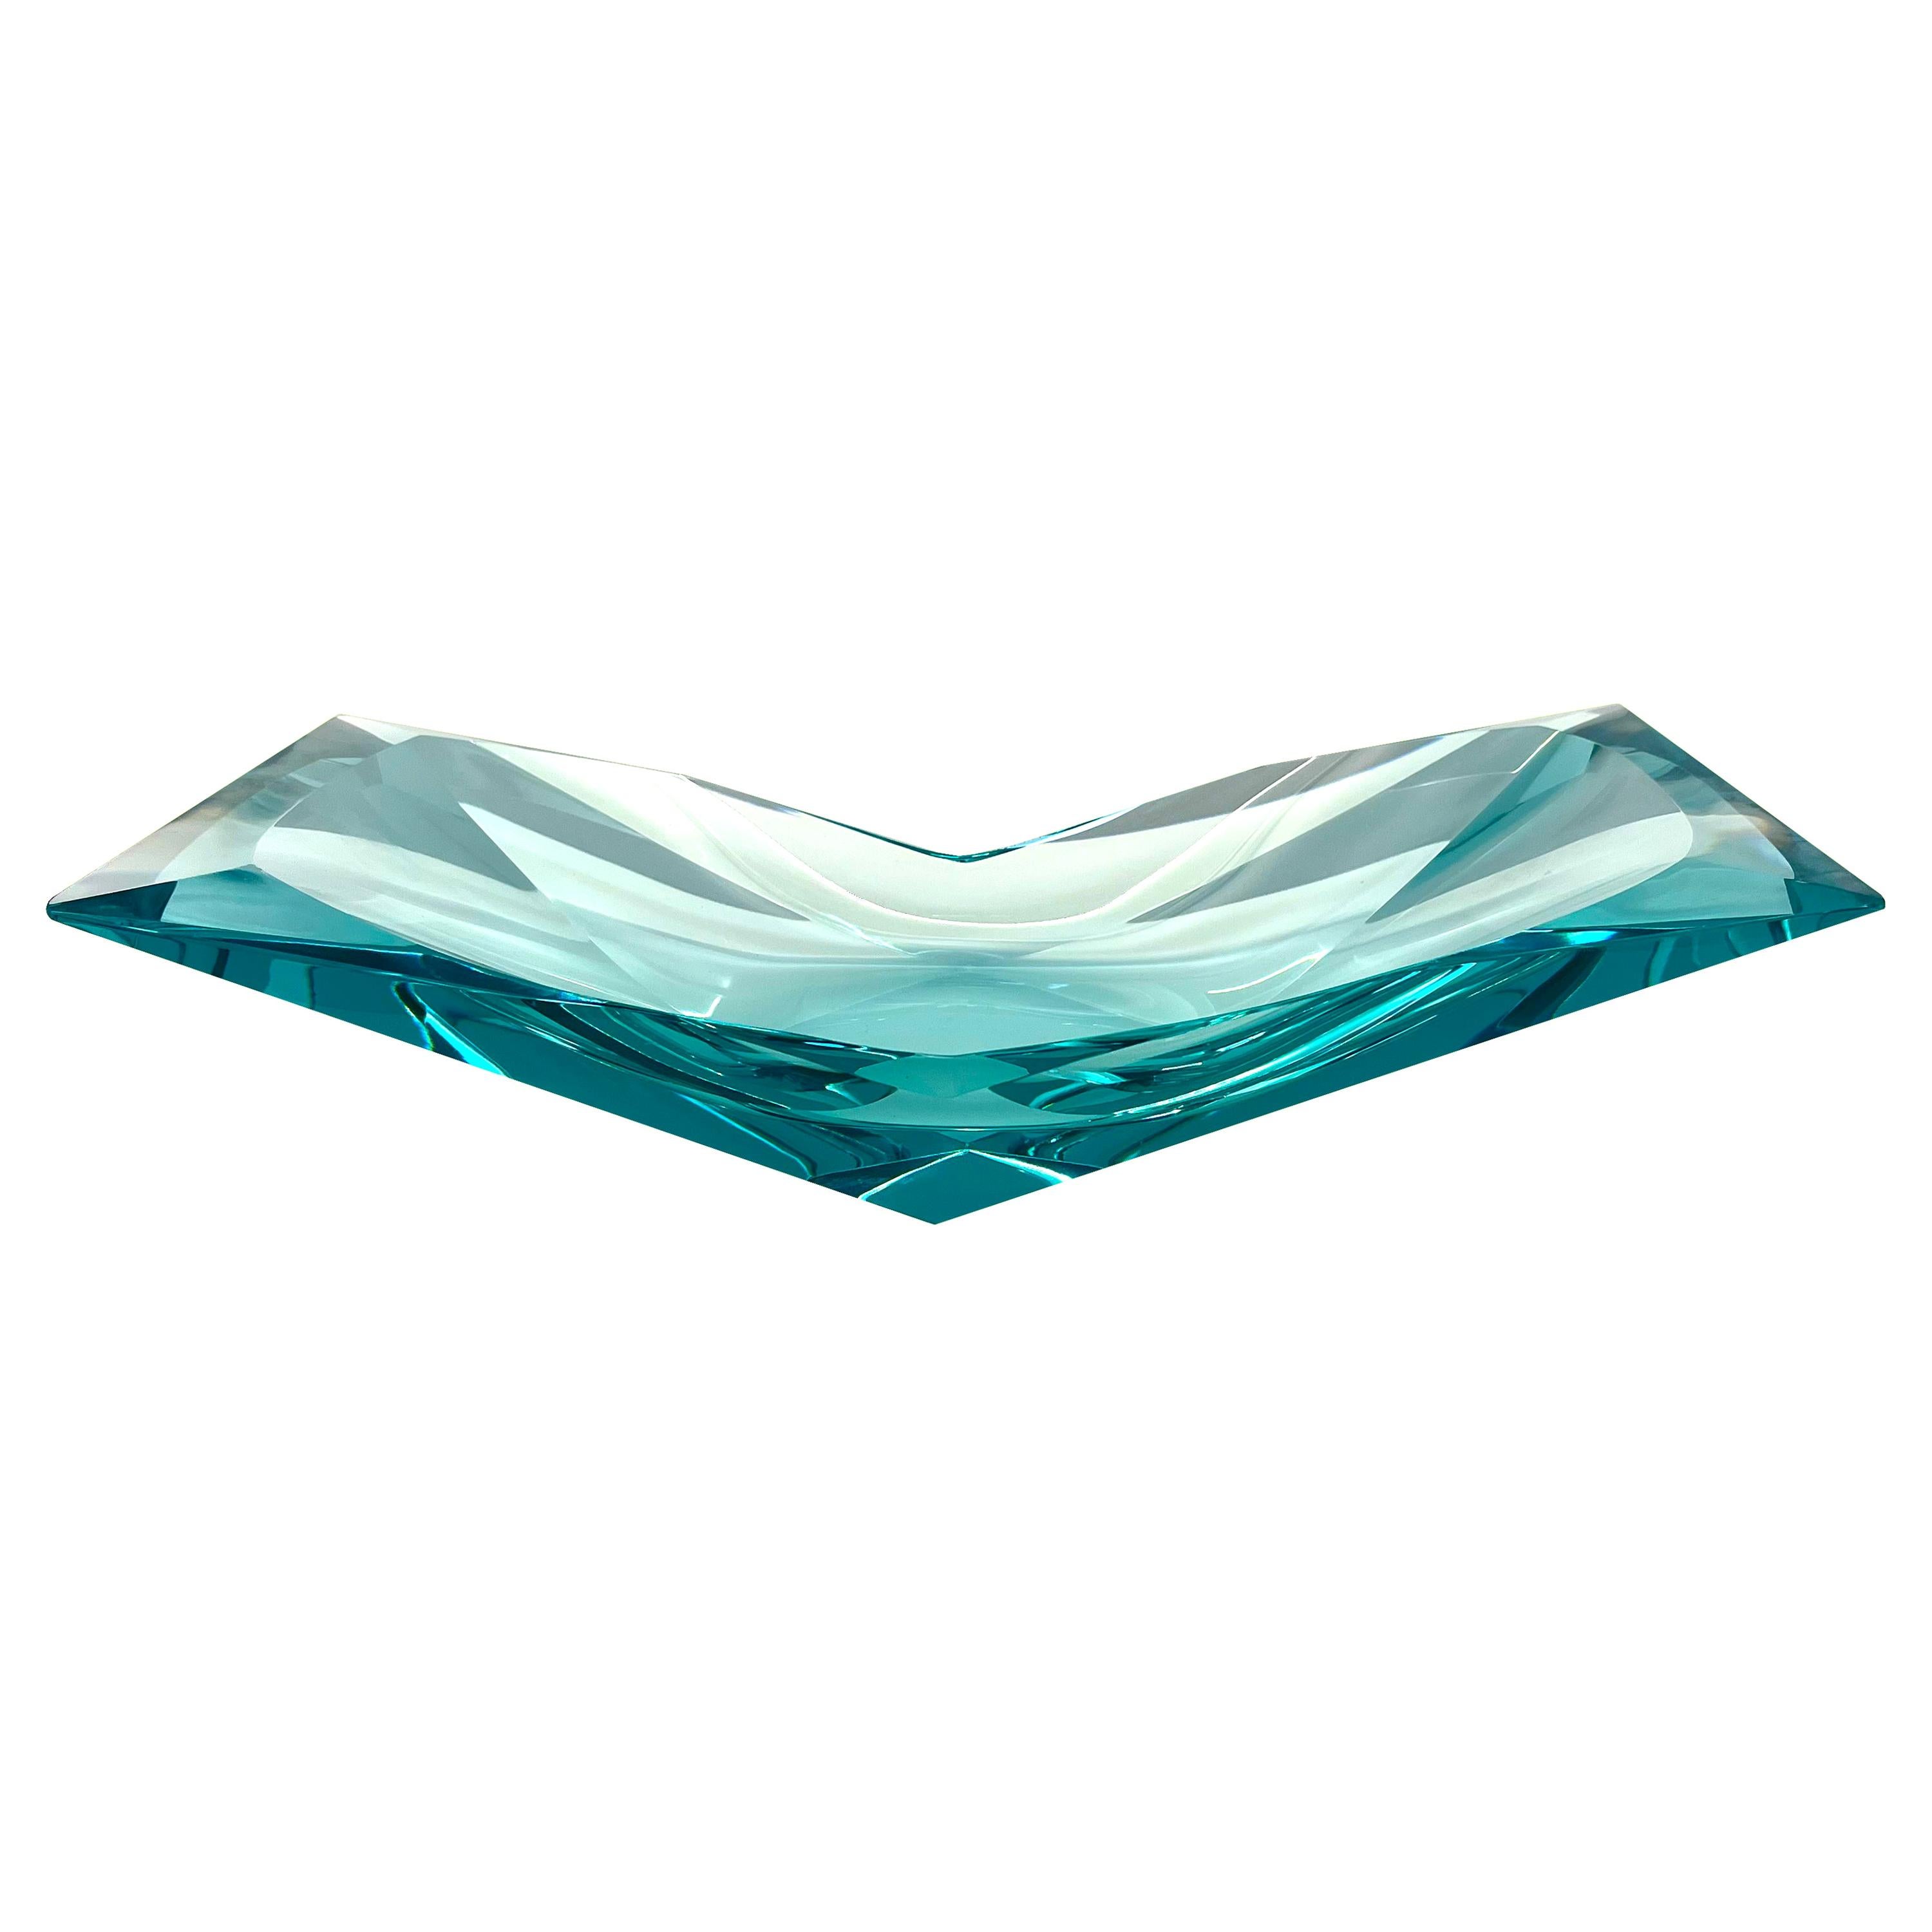 Contemporary 'Papillon' Artistic Crystal Bowl Aquamarine by Ghirò Studio